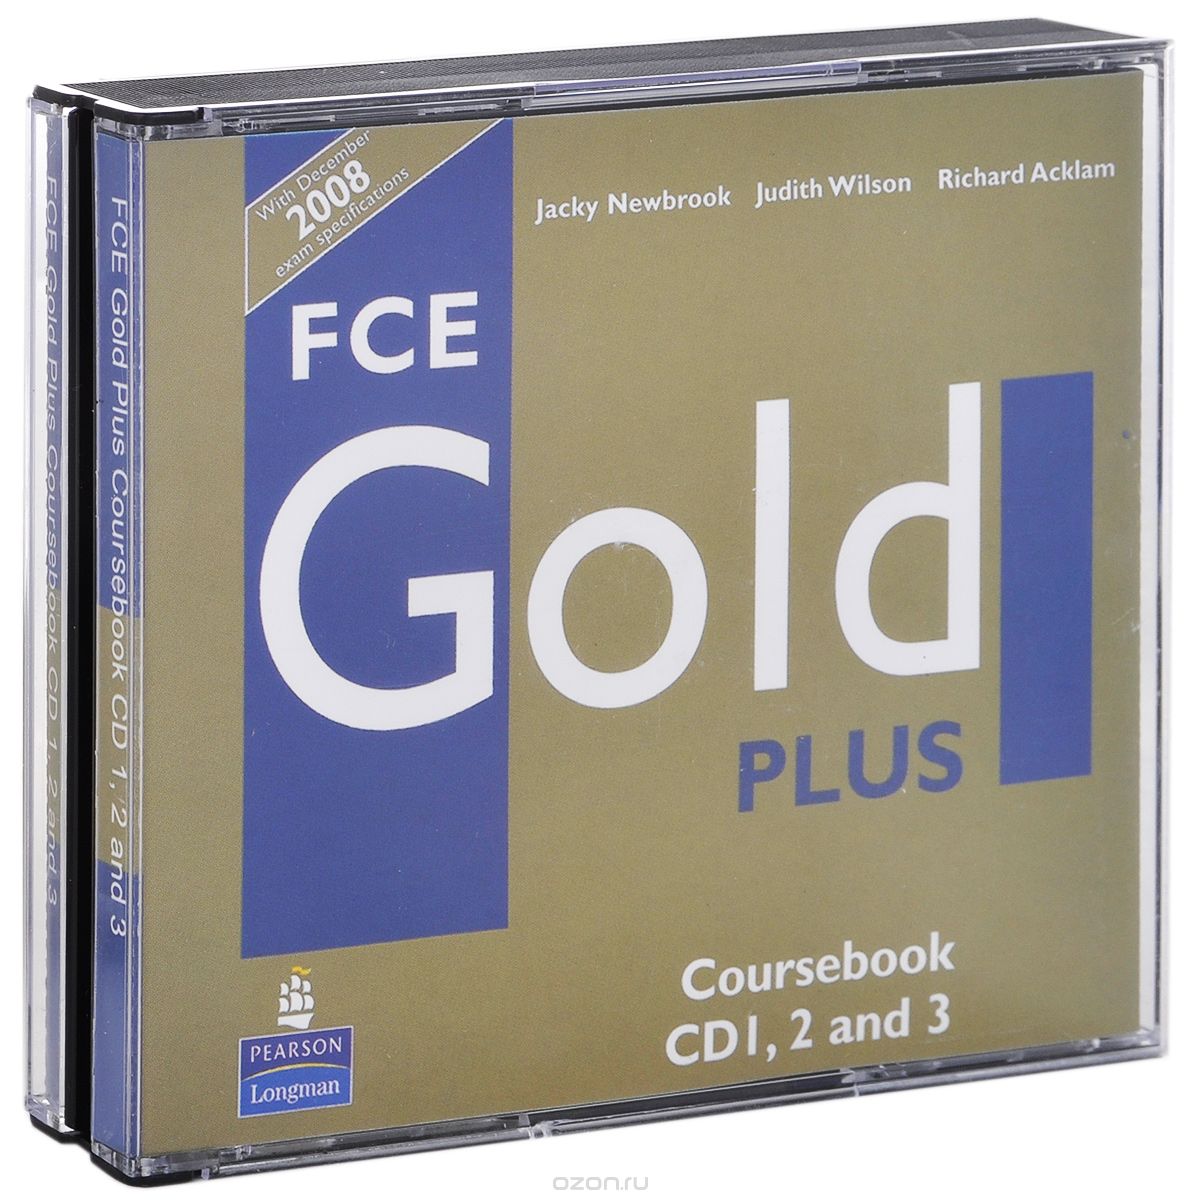 FCE Gold Plus: Coursebook (аудиокурс на 3 CD)